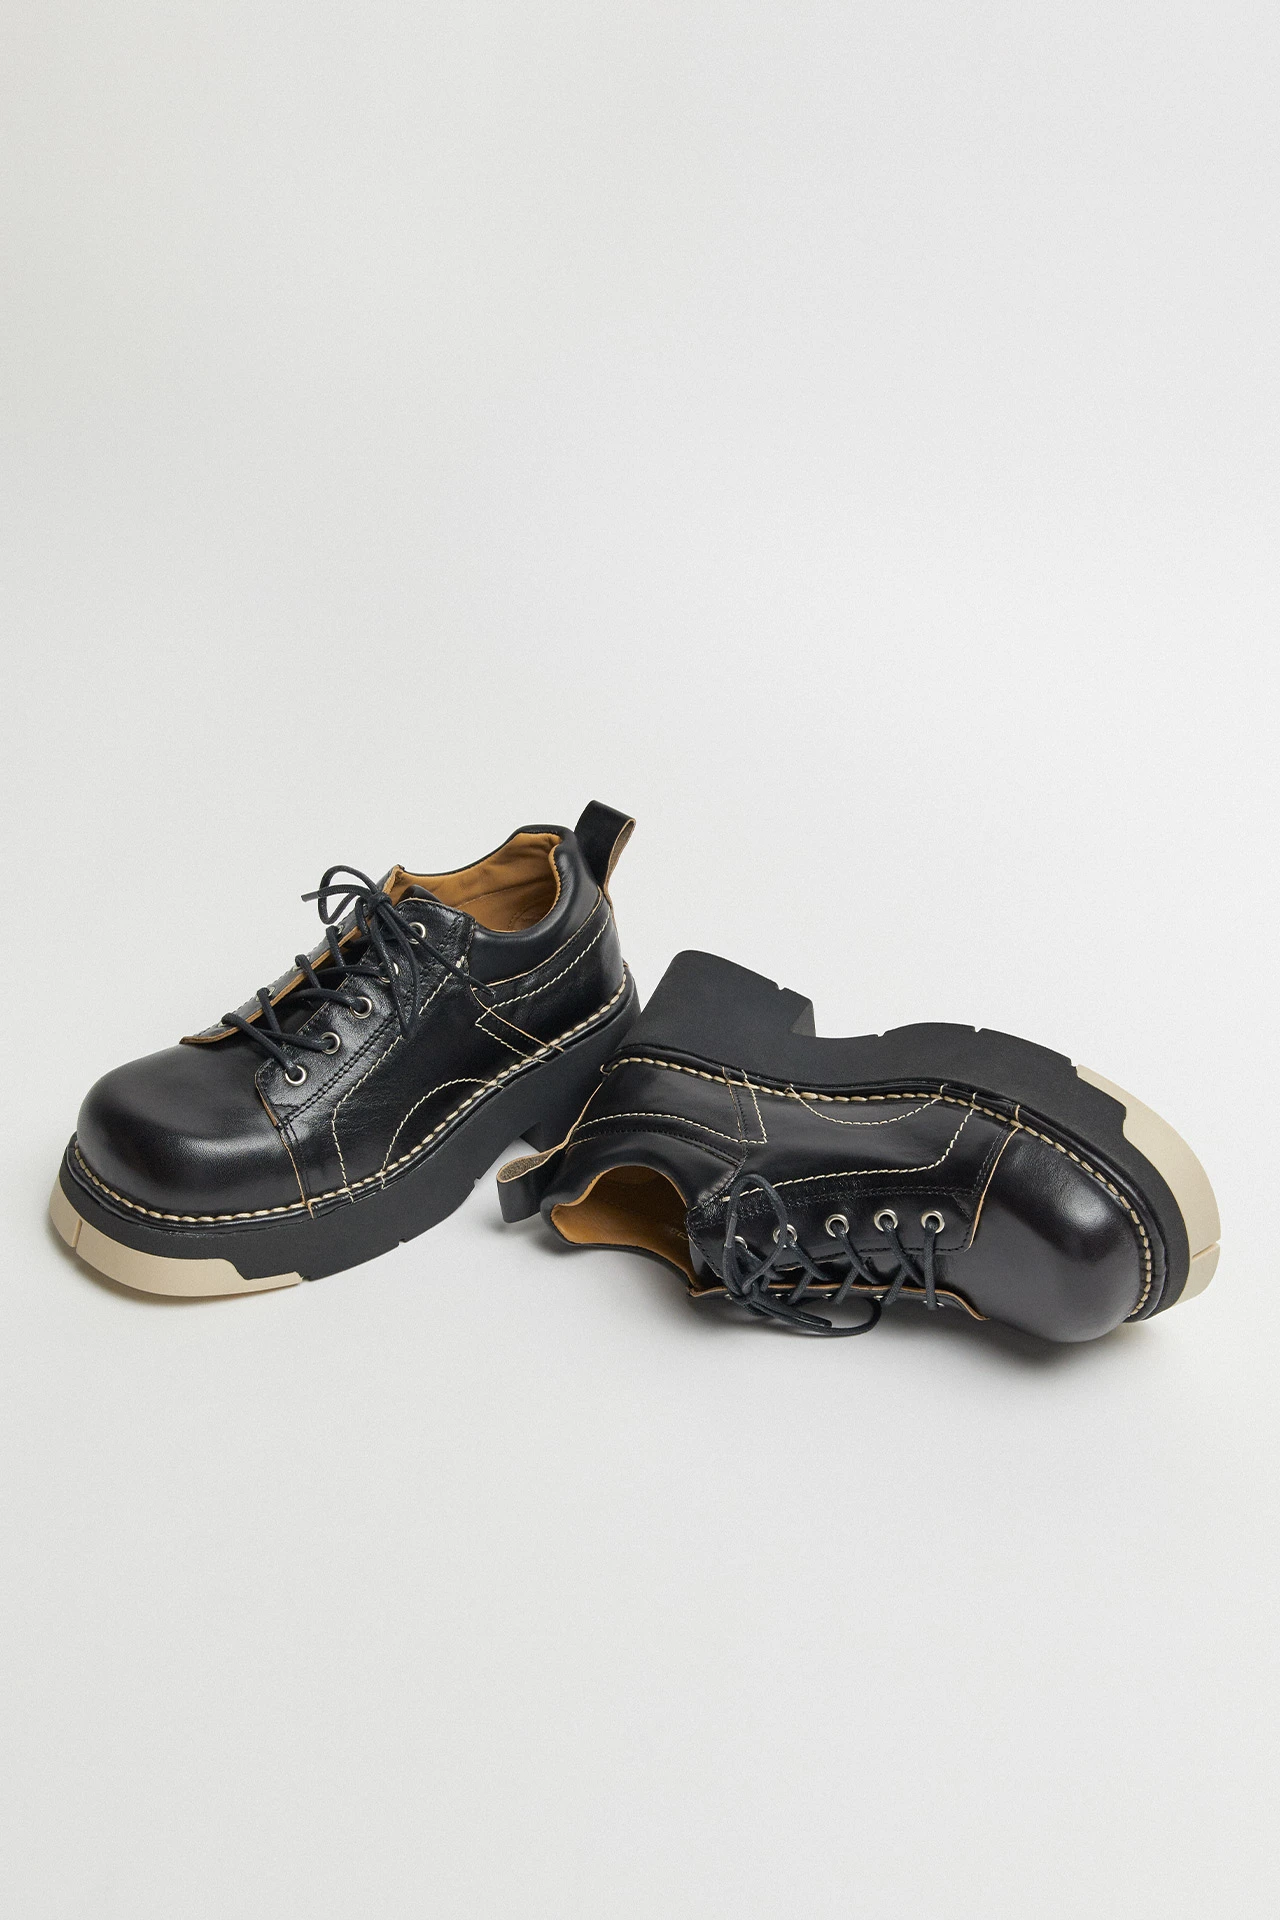 Miista-erina-black-ankle-boots-02